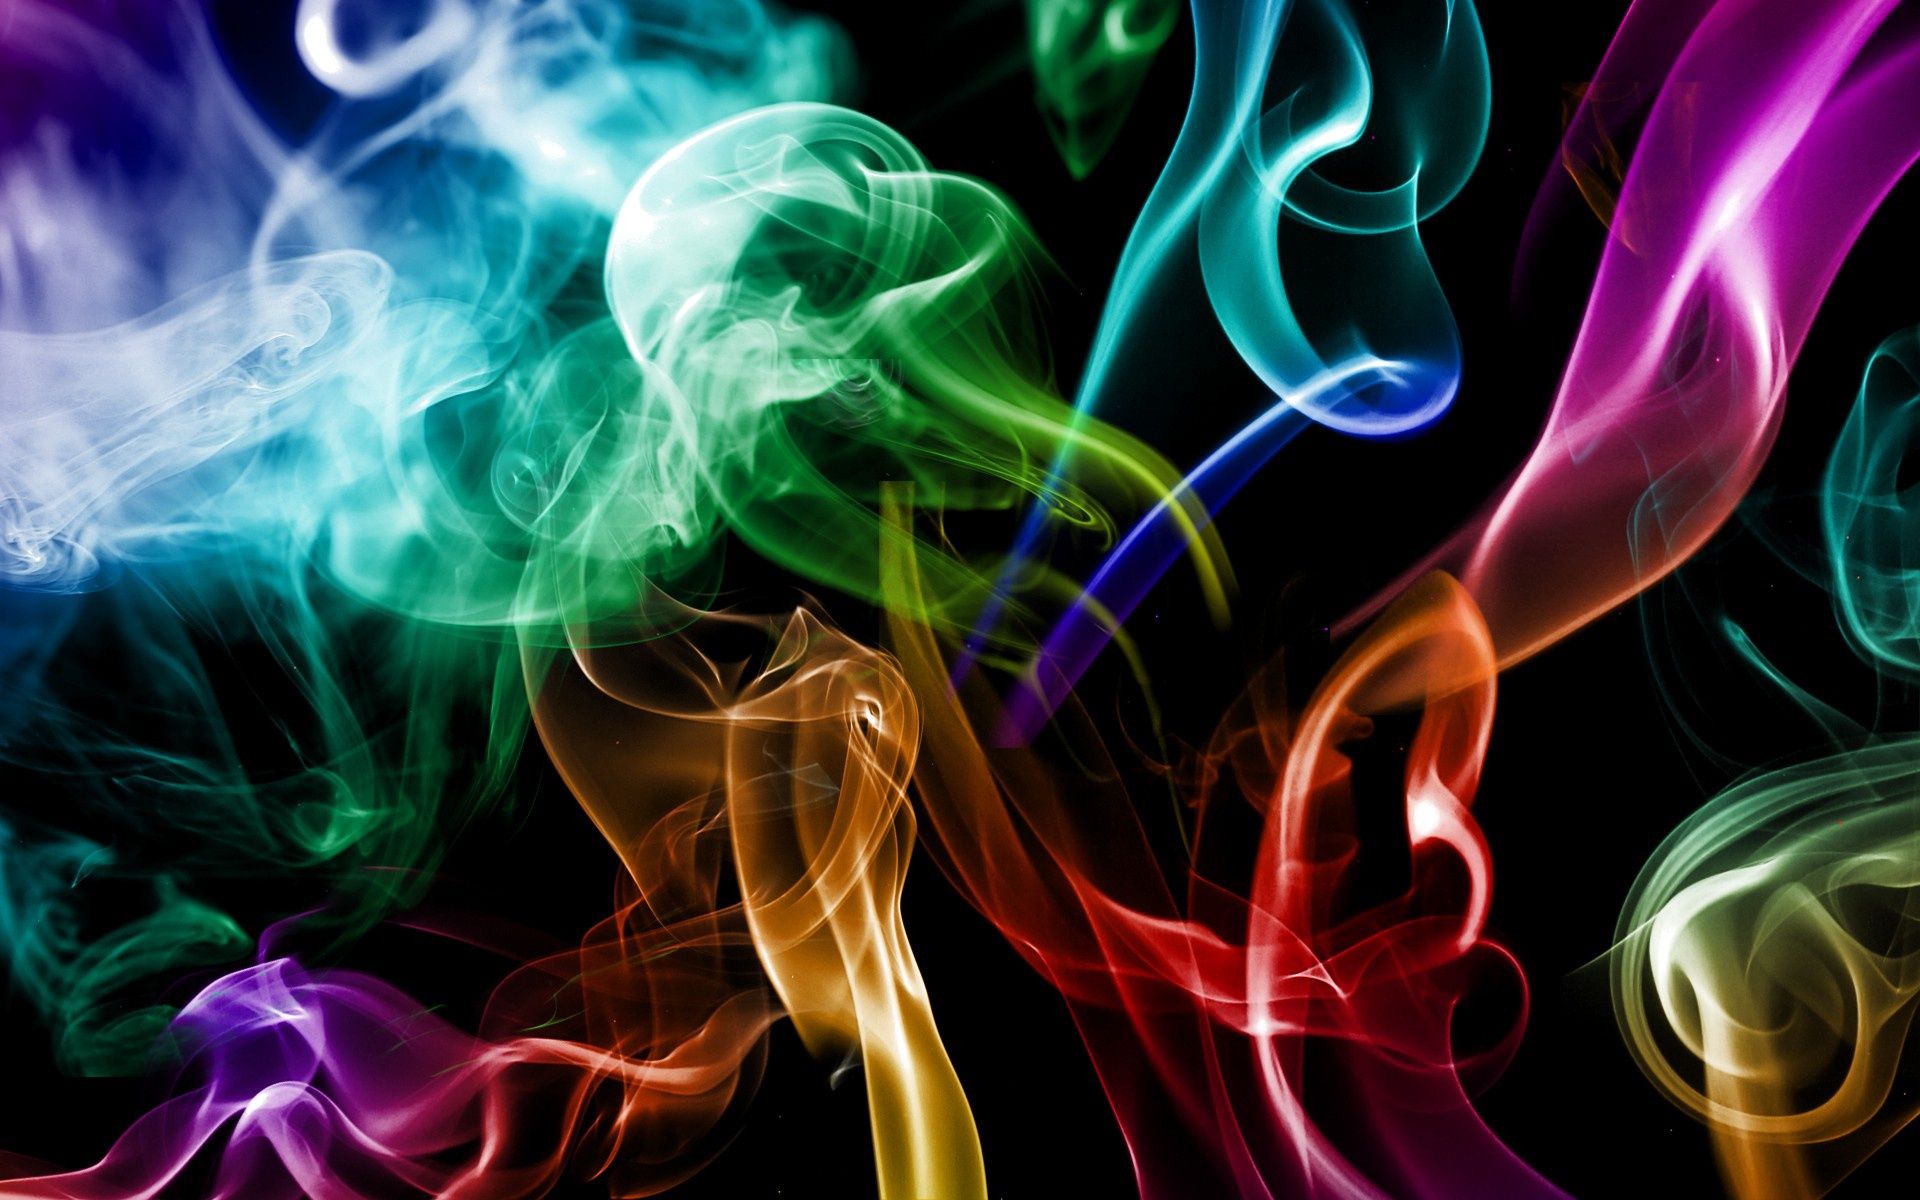  Farbiges Hintergrundbild 1920x1200. Smoke farbige Abstraktion kreative 1920x1200 HD Hintergrundbilder, HD, Bild